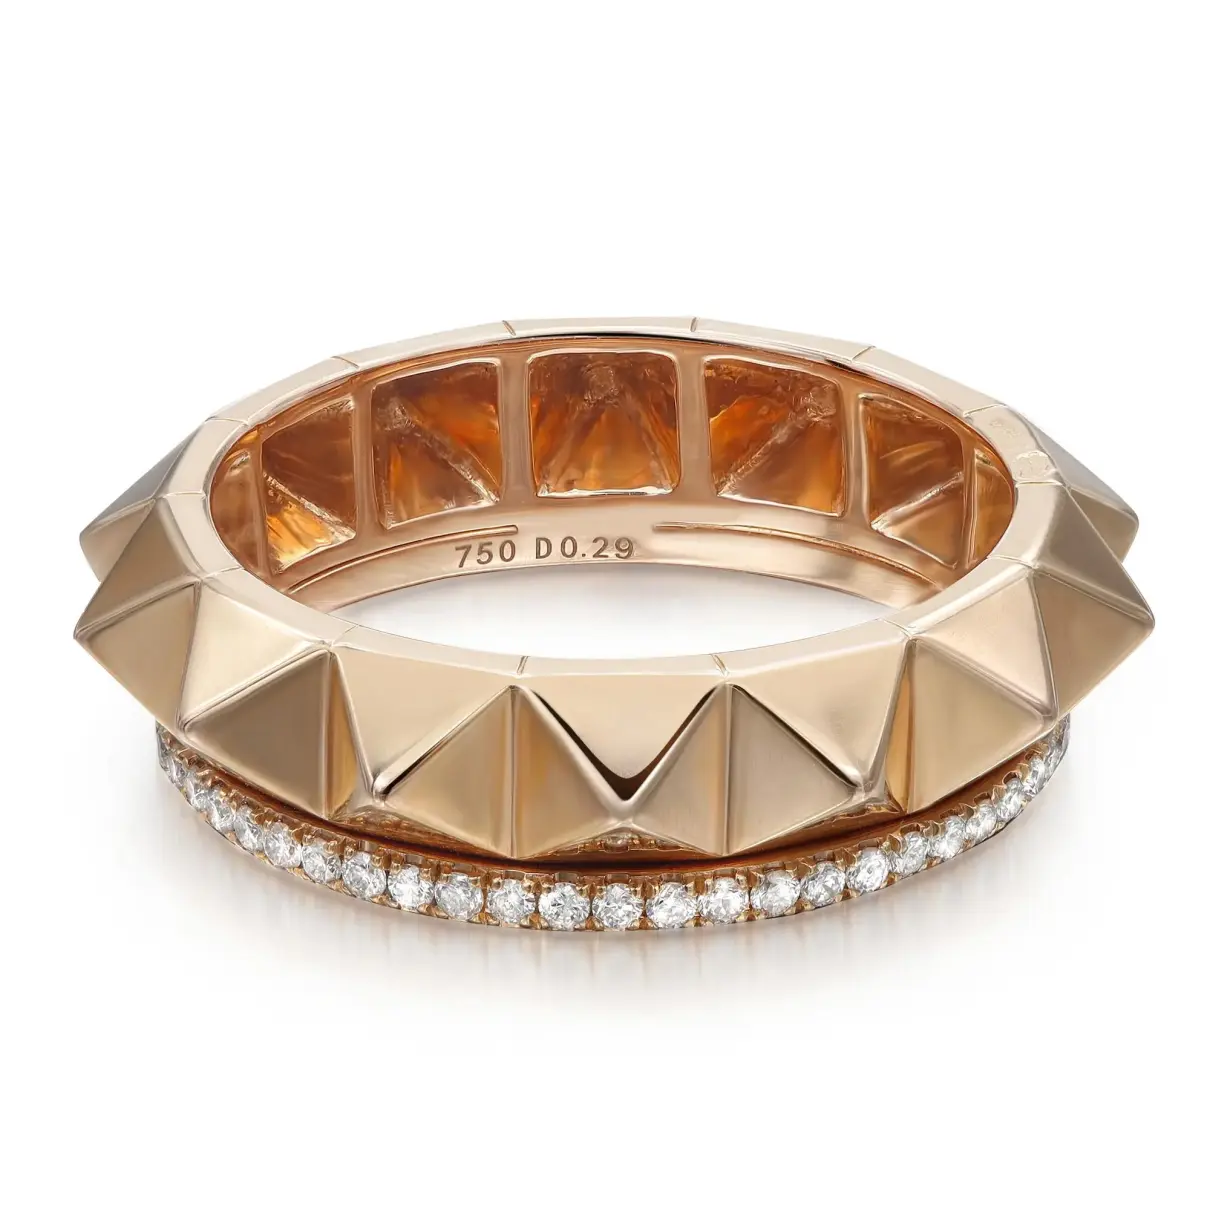 Buy Messika Pink gold ring online